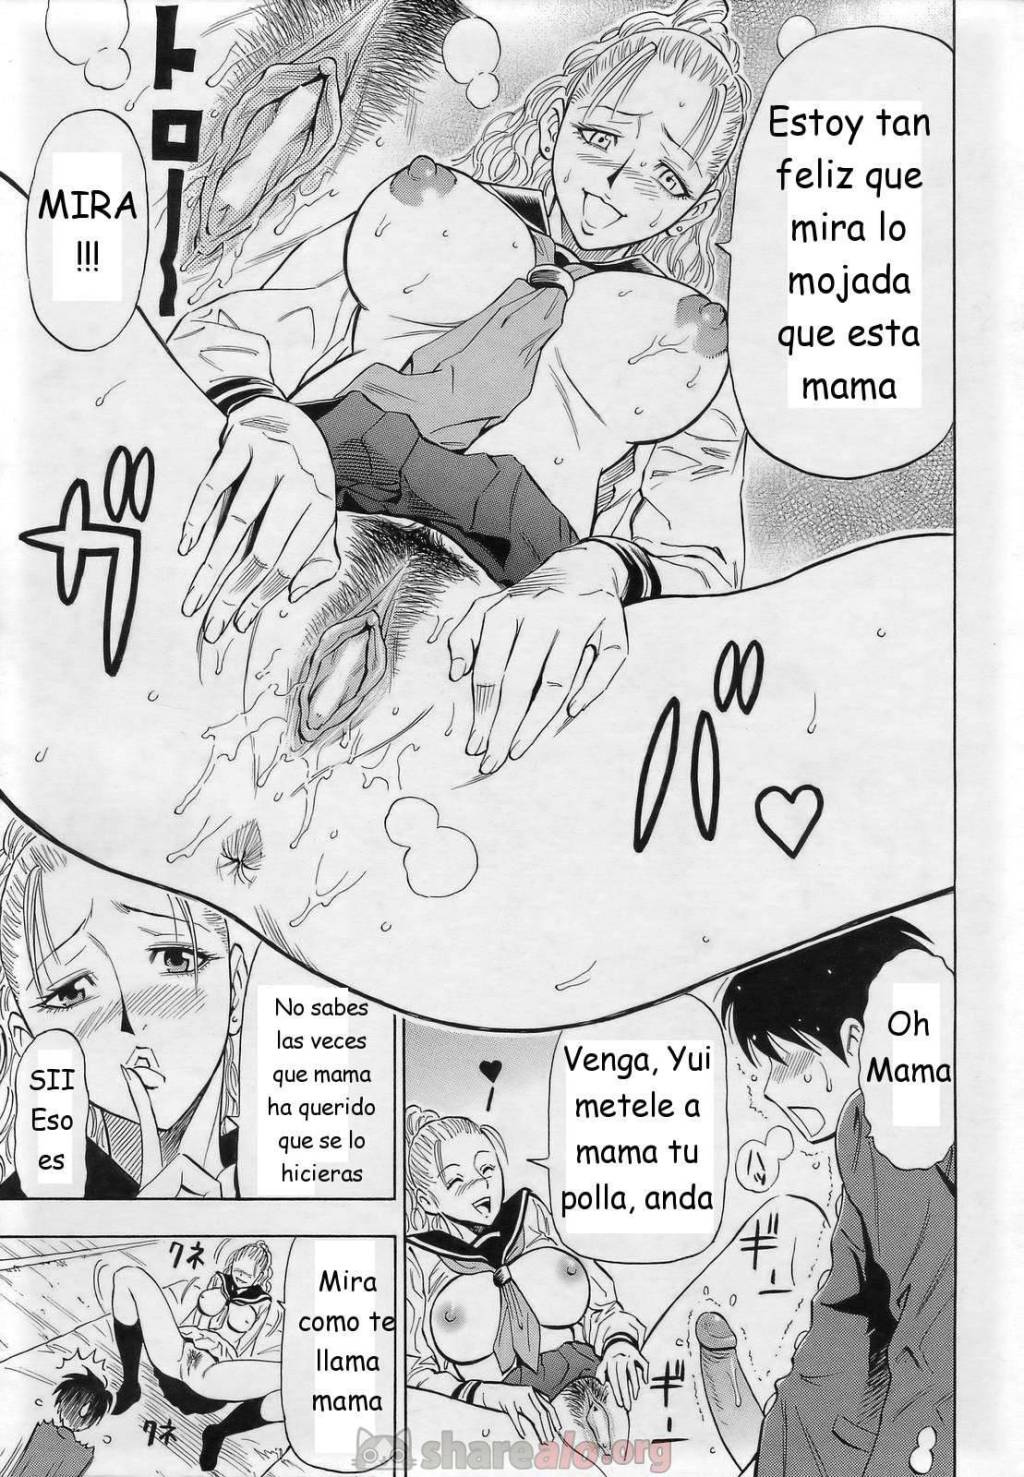 Sailor Mama (Mama Marinerita) - 13 - Comics Porno - Hentai Manga - Cartoon XXX